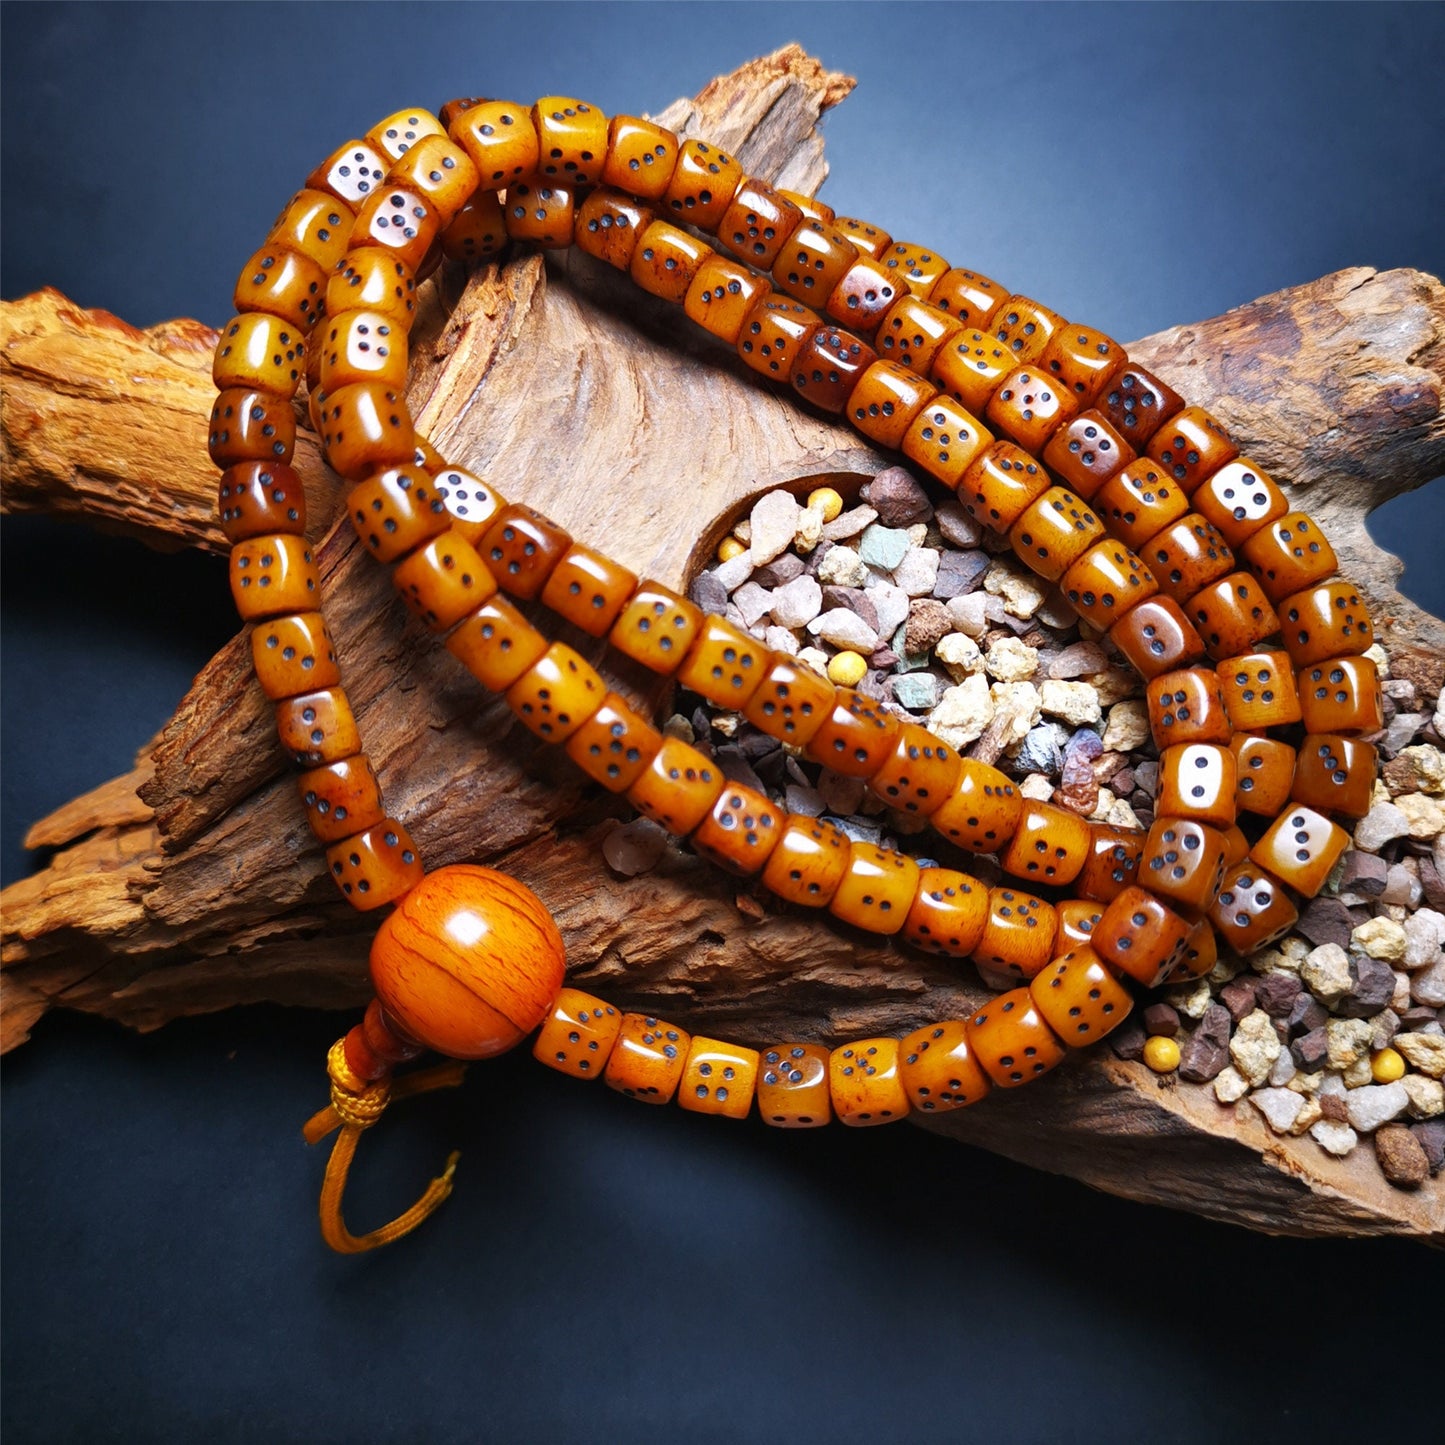 Gandhanra Handmade Tibetan Yak Bone Dice Beads Mala Bracelet,108 Prayer Beads Bracelet for Meditation